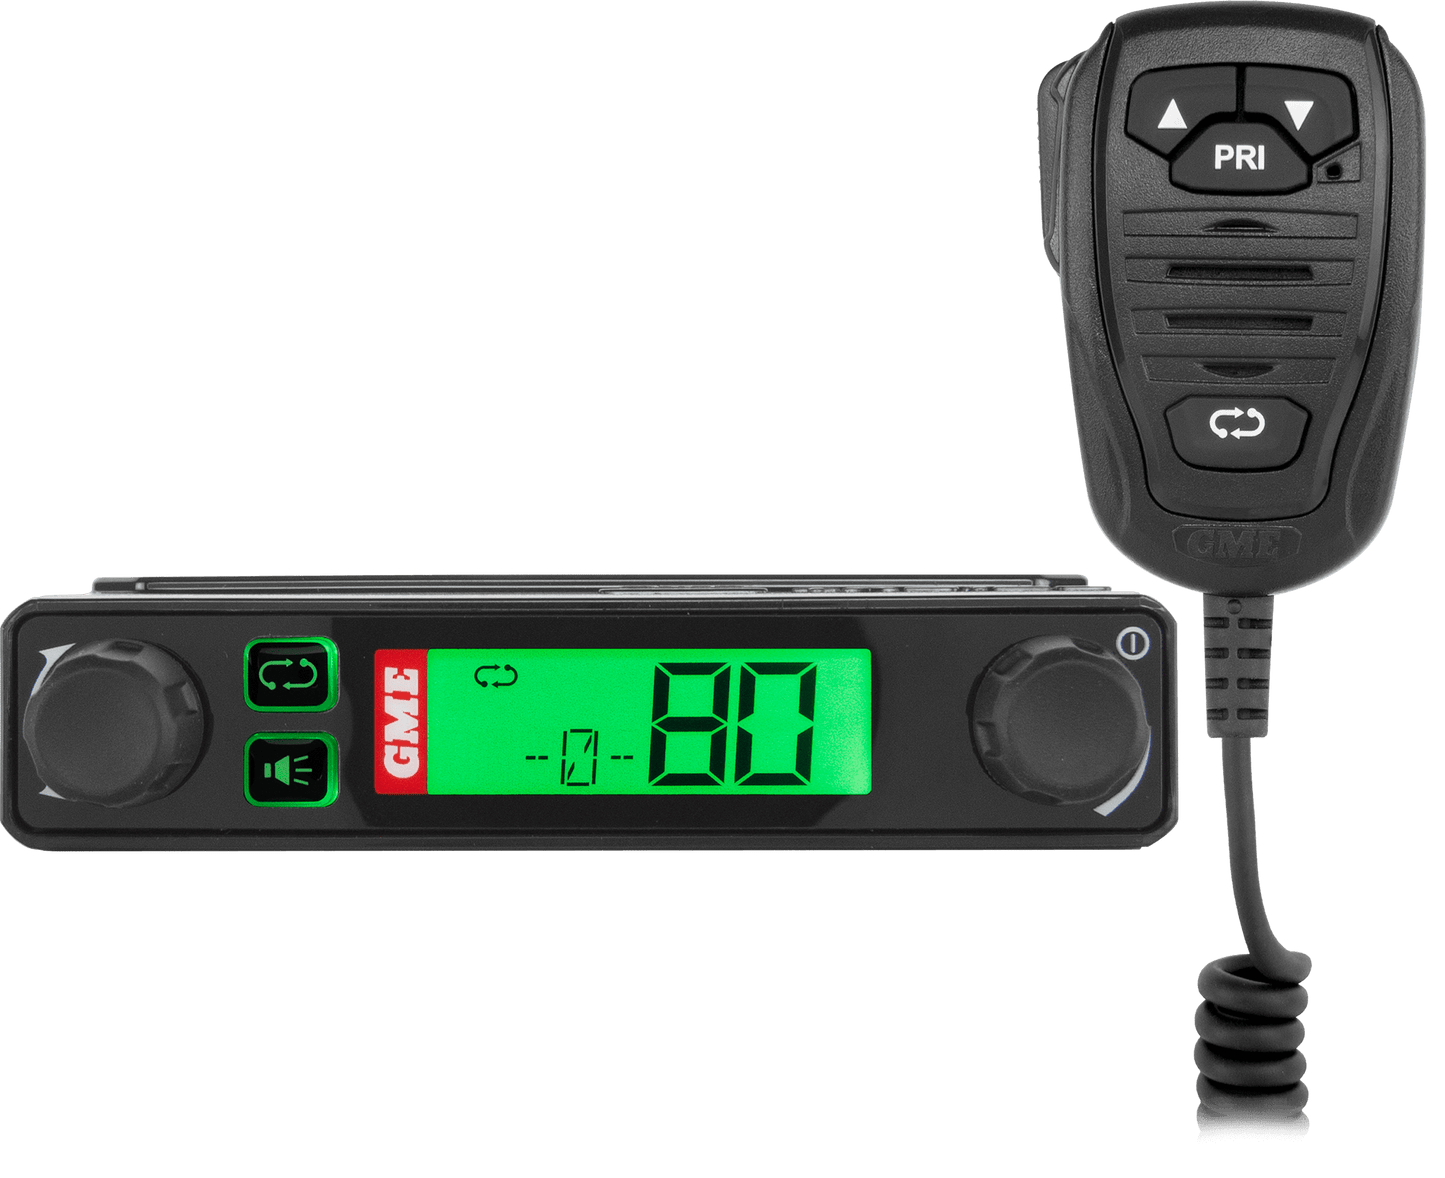 TX3120s 5w Super Compact UHF CB Radio